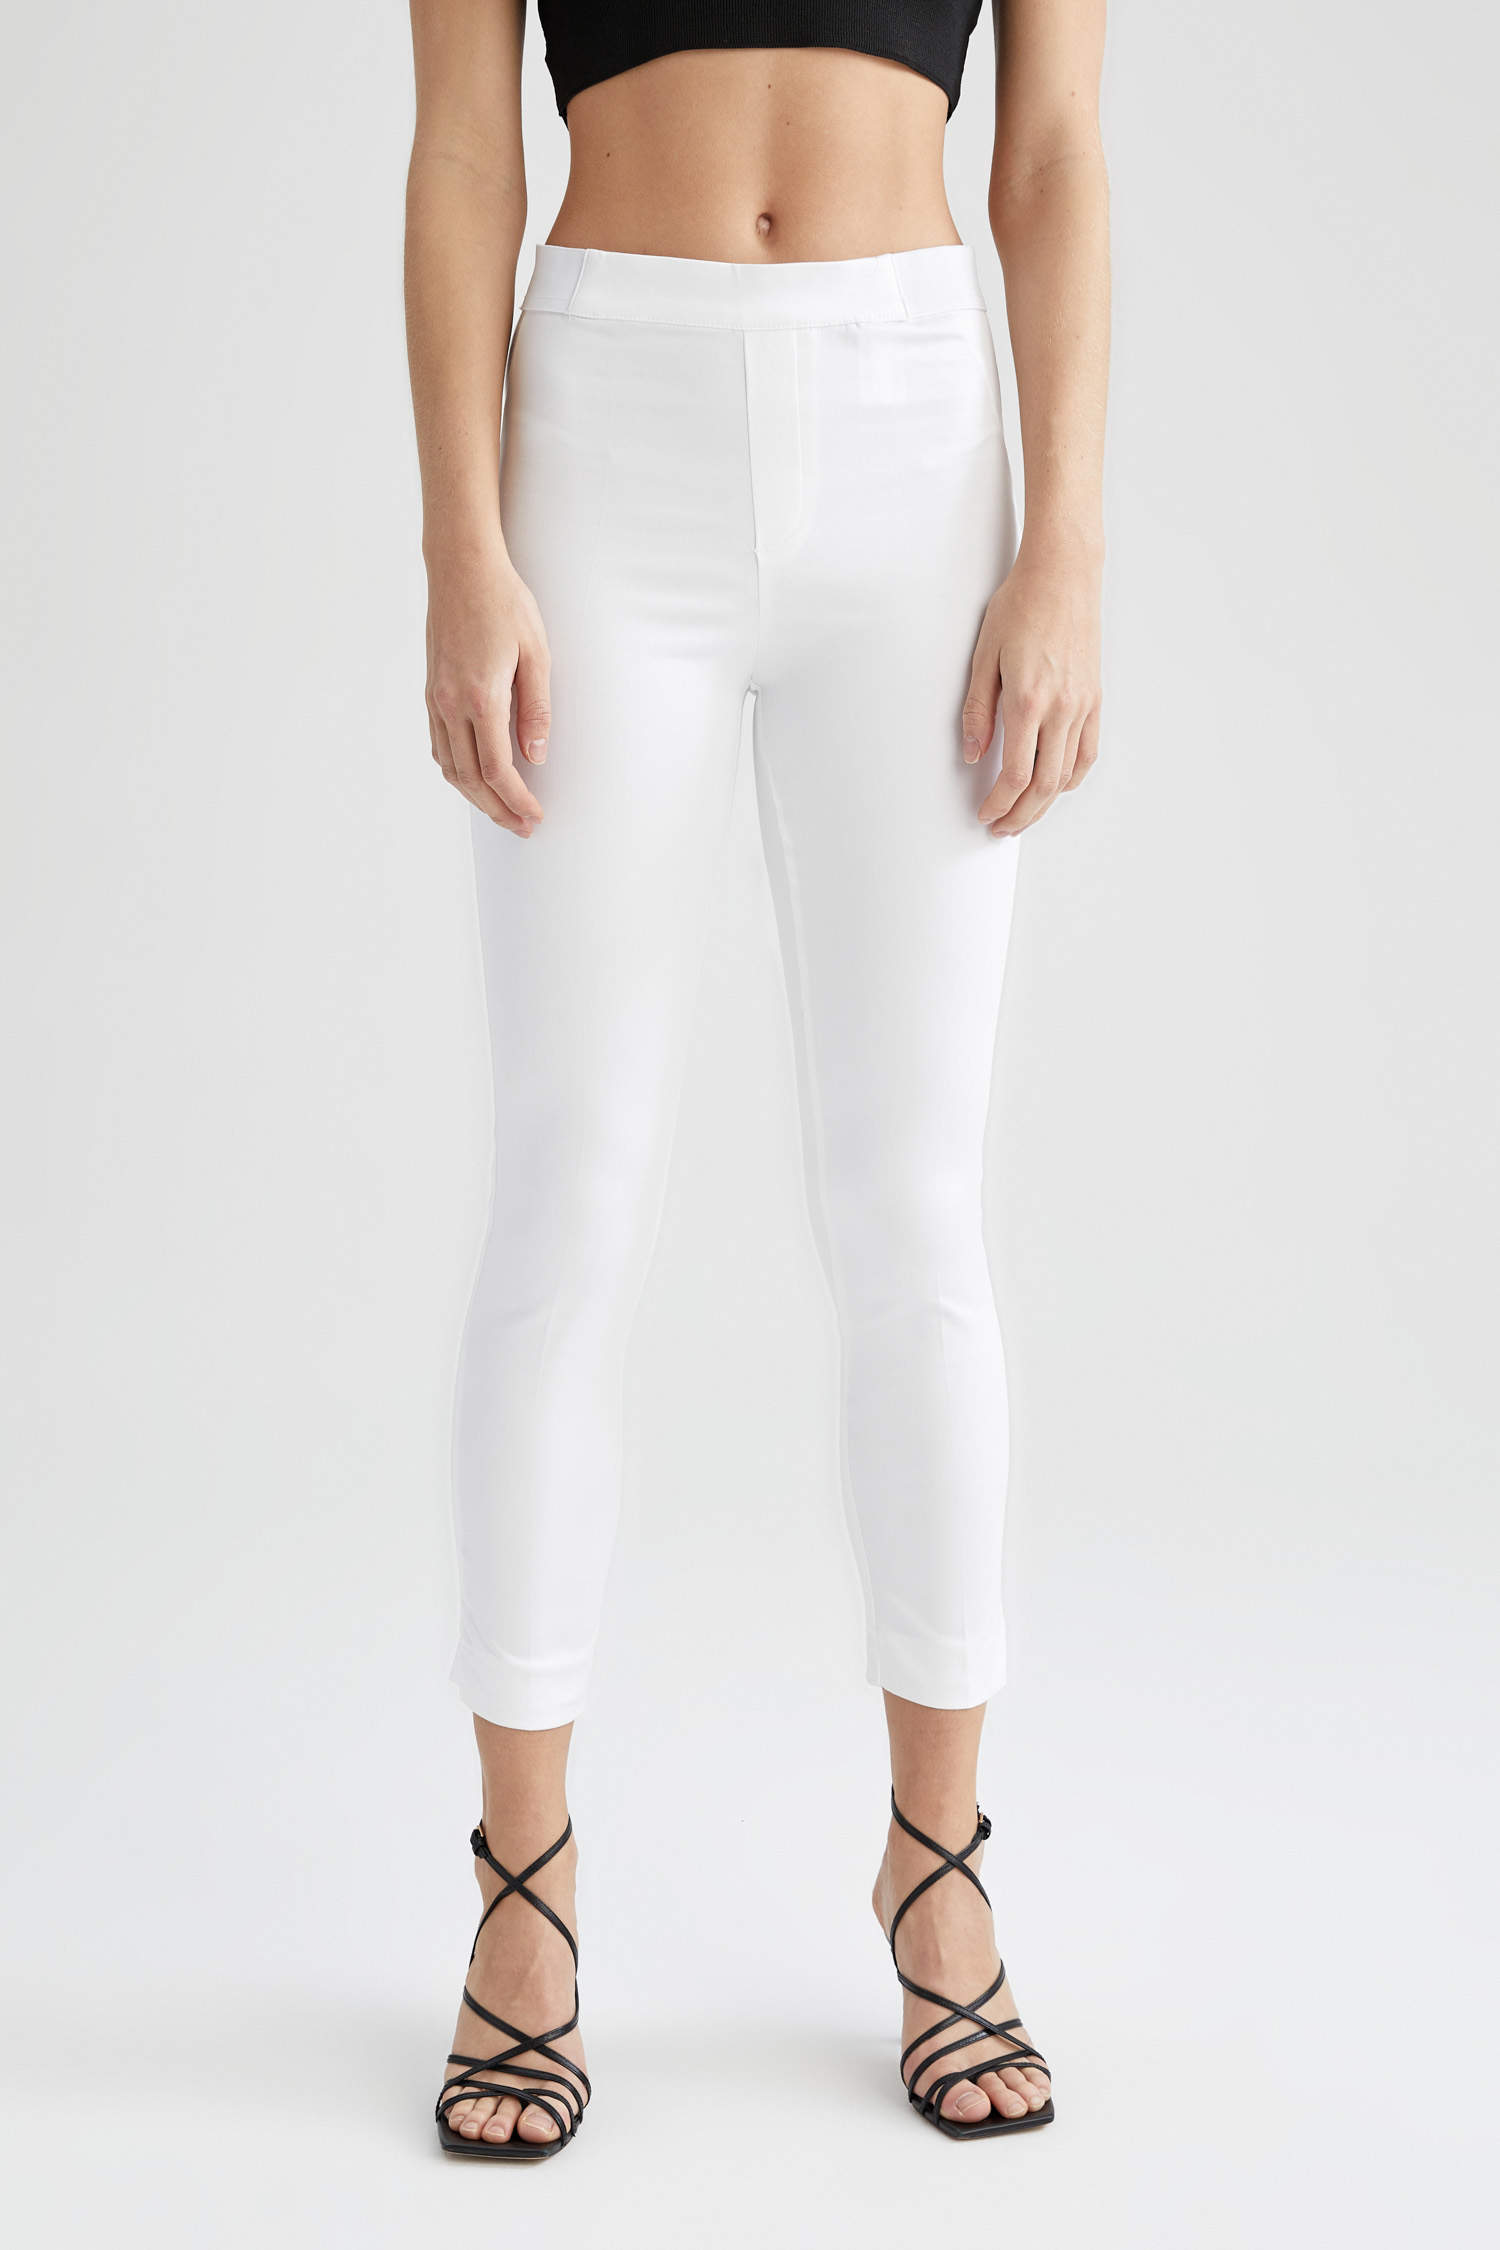 Satin WideLeg Trousers  Clothing Sale  The White Company UK